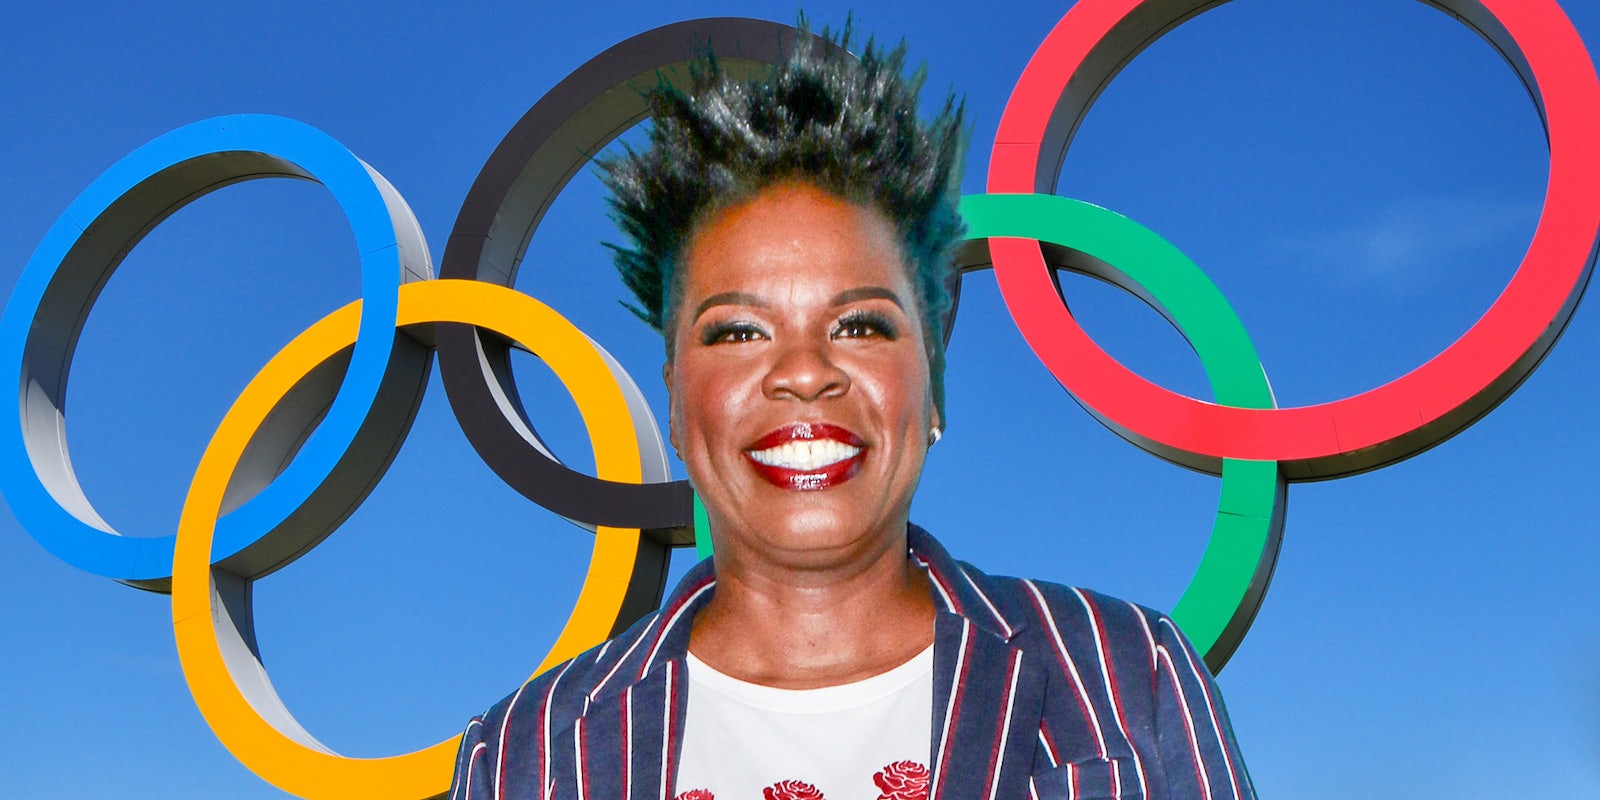 Leslie Jones in front of Olympic rings